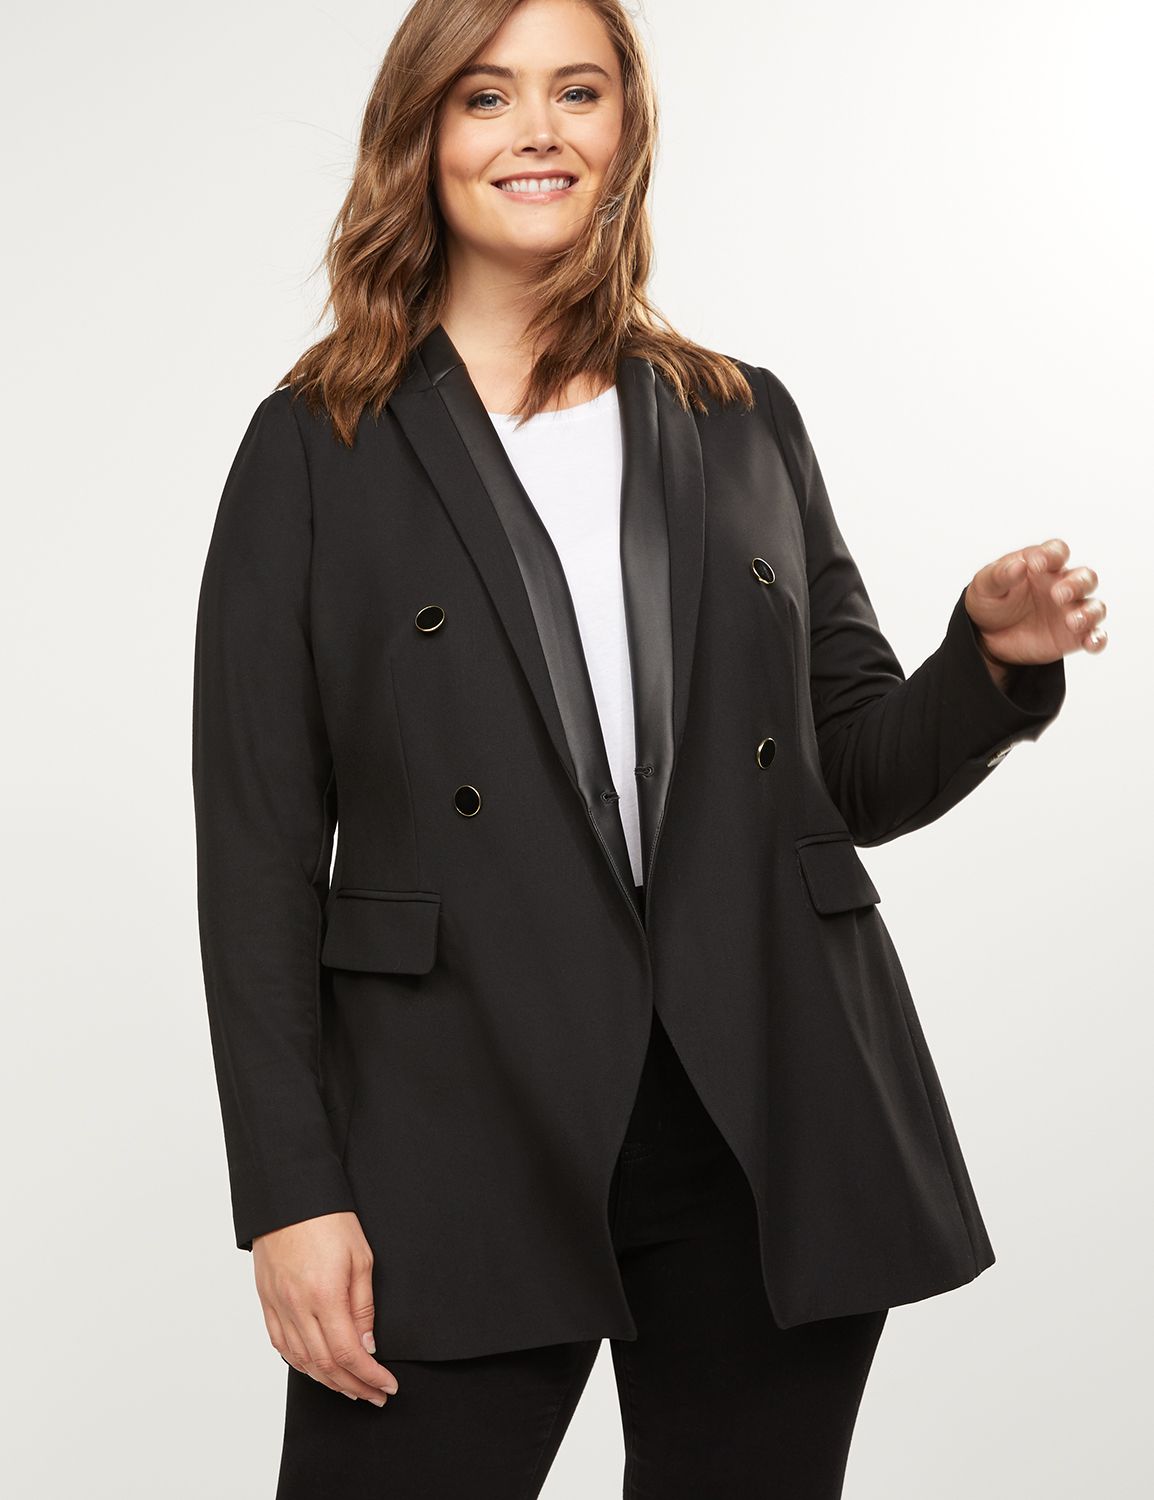 Plus Size Women's Jackets, Coats & Blazers | Lane Bryant